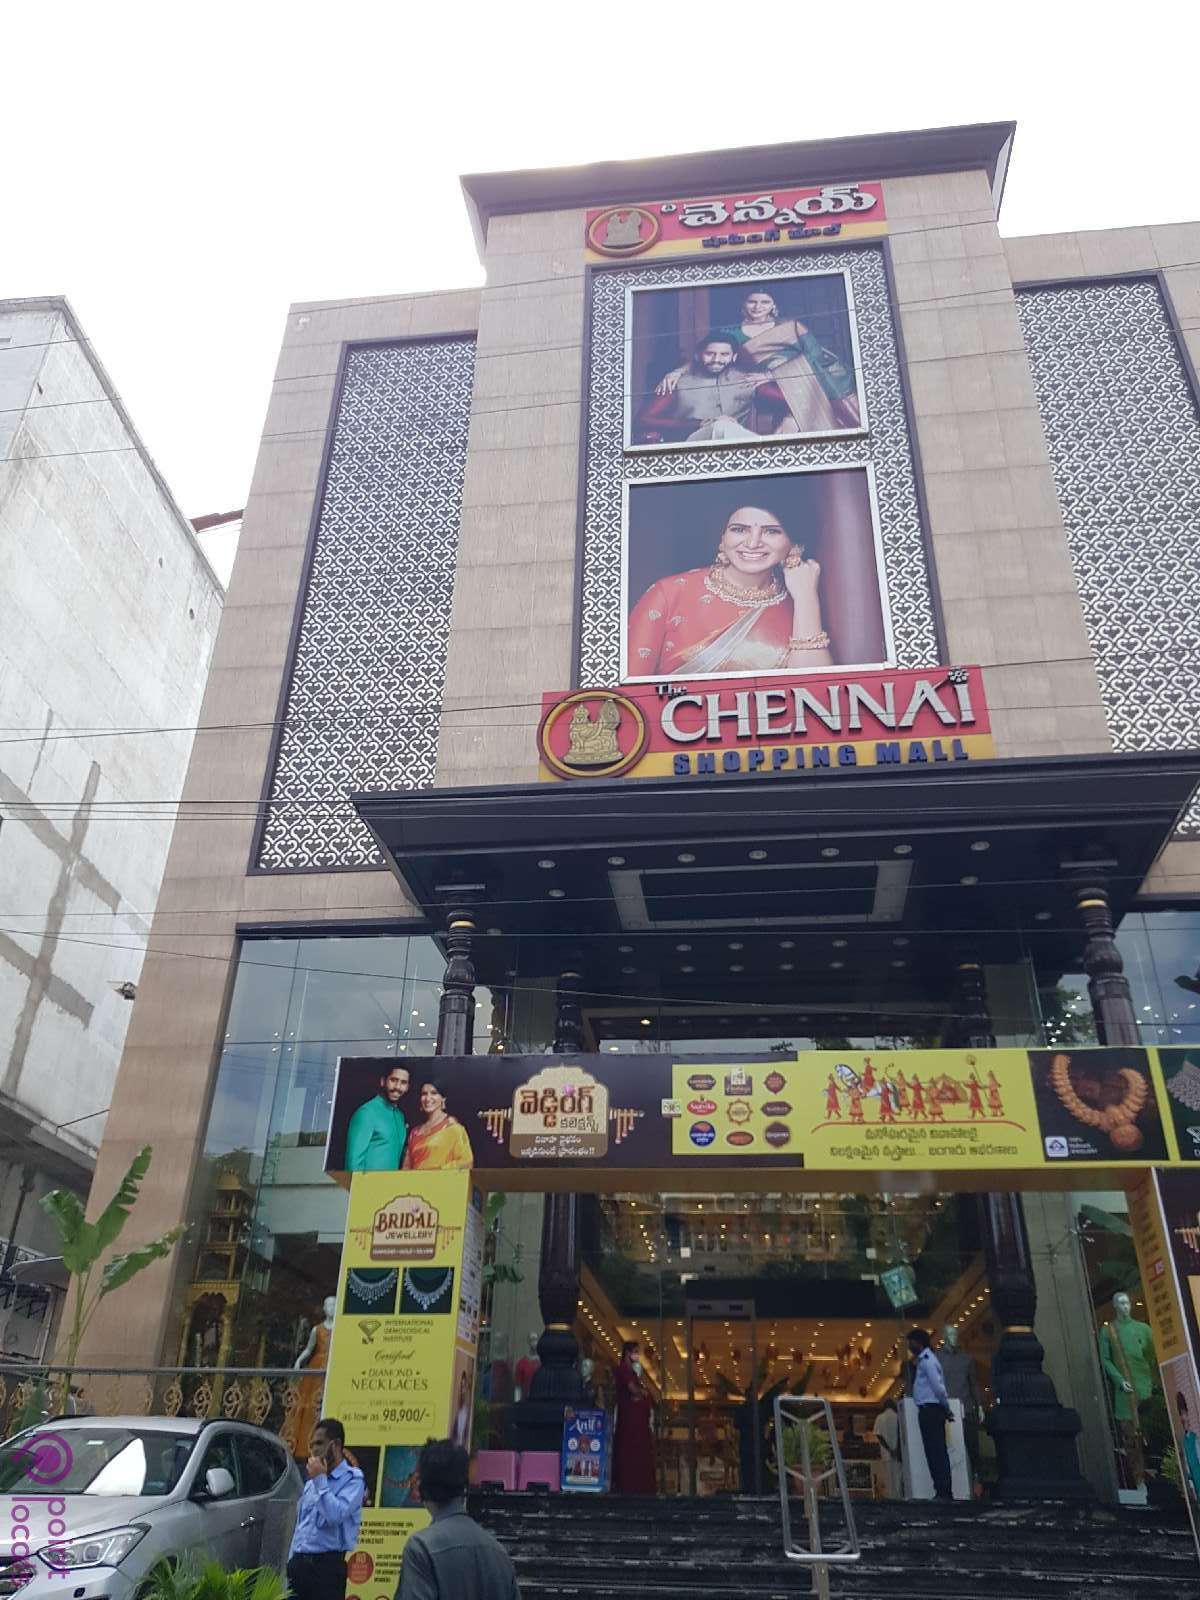 Chennai Shopping Mall,  Secunderabad